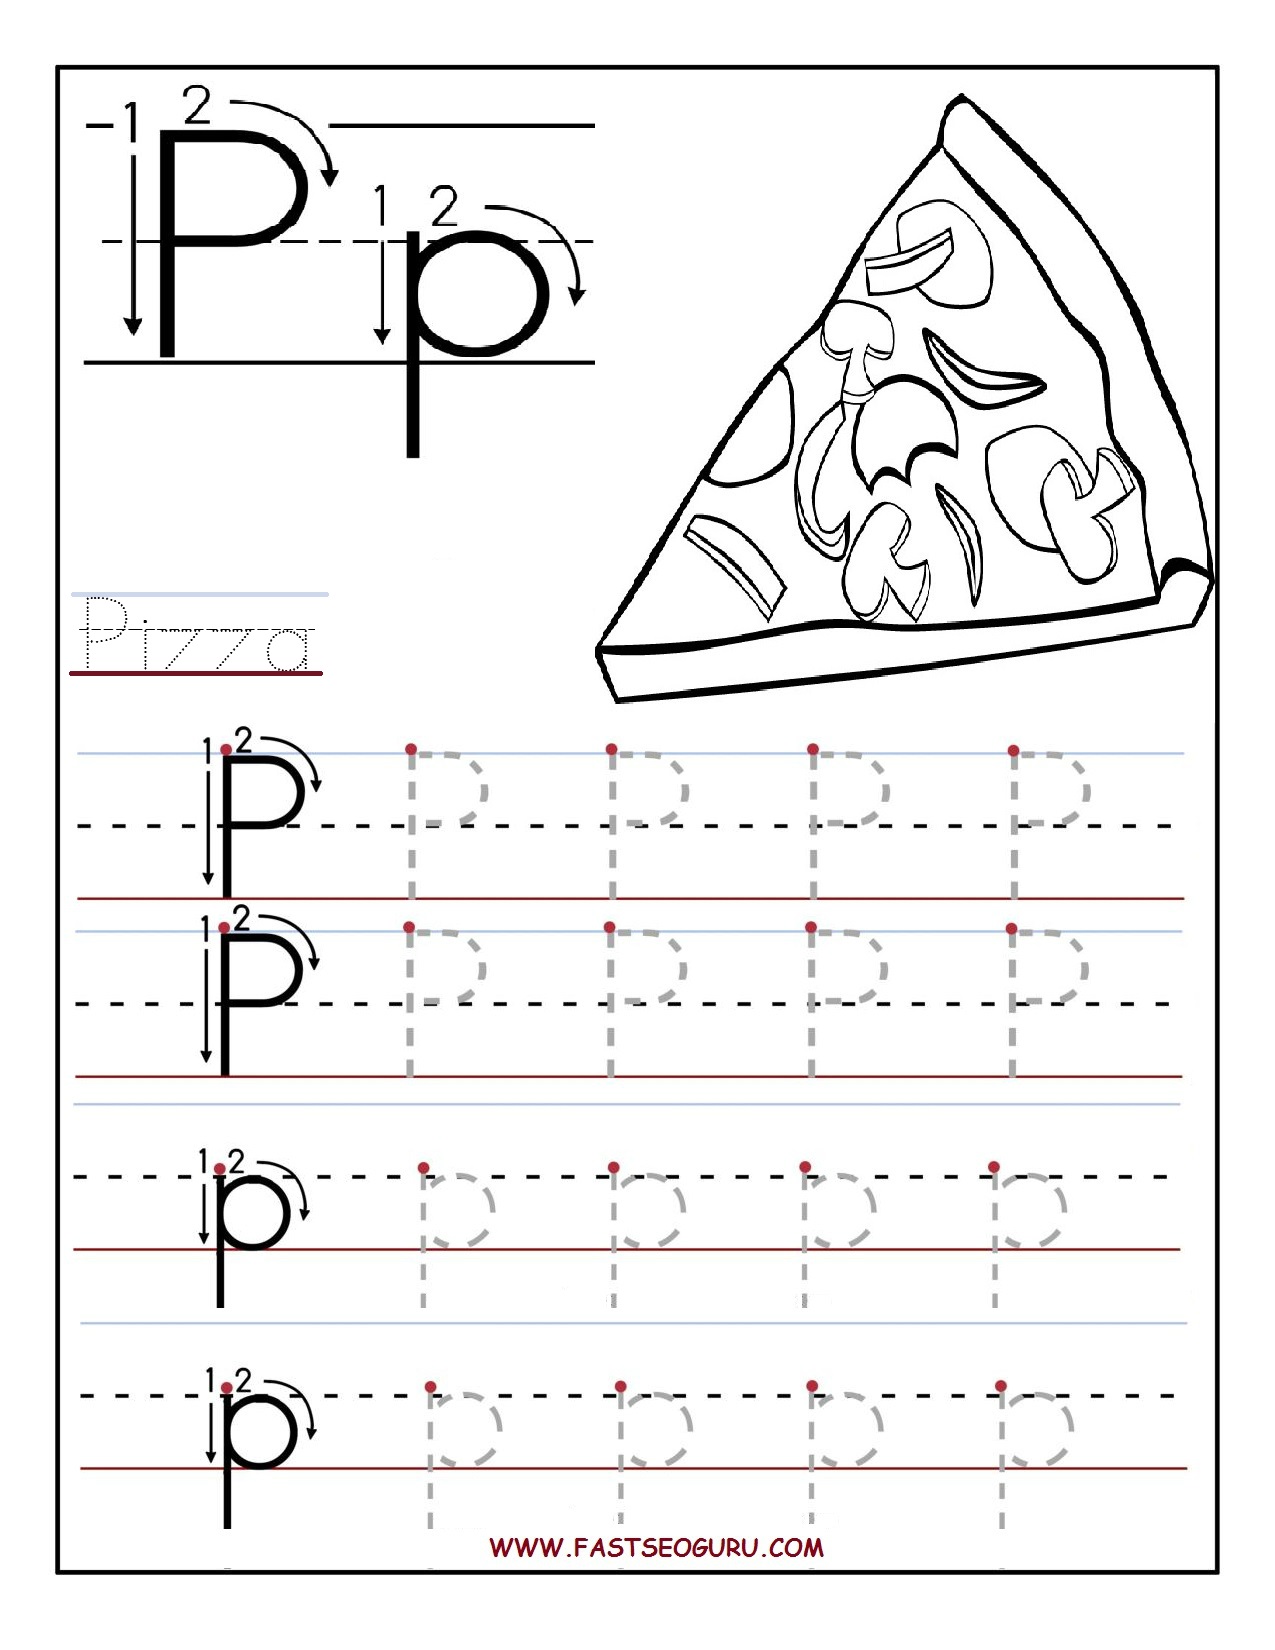 Printable letter P tracing worksheets for preschool.jpg